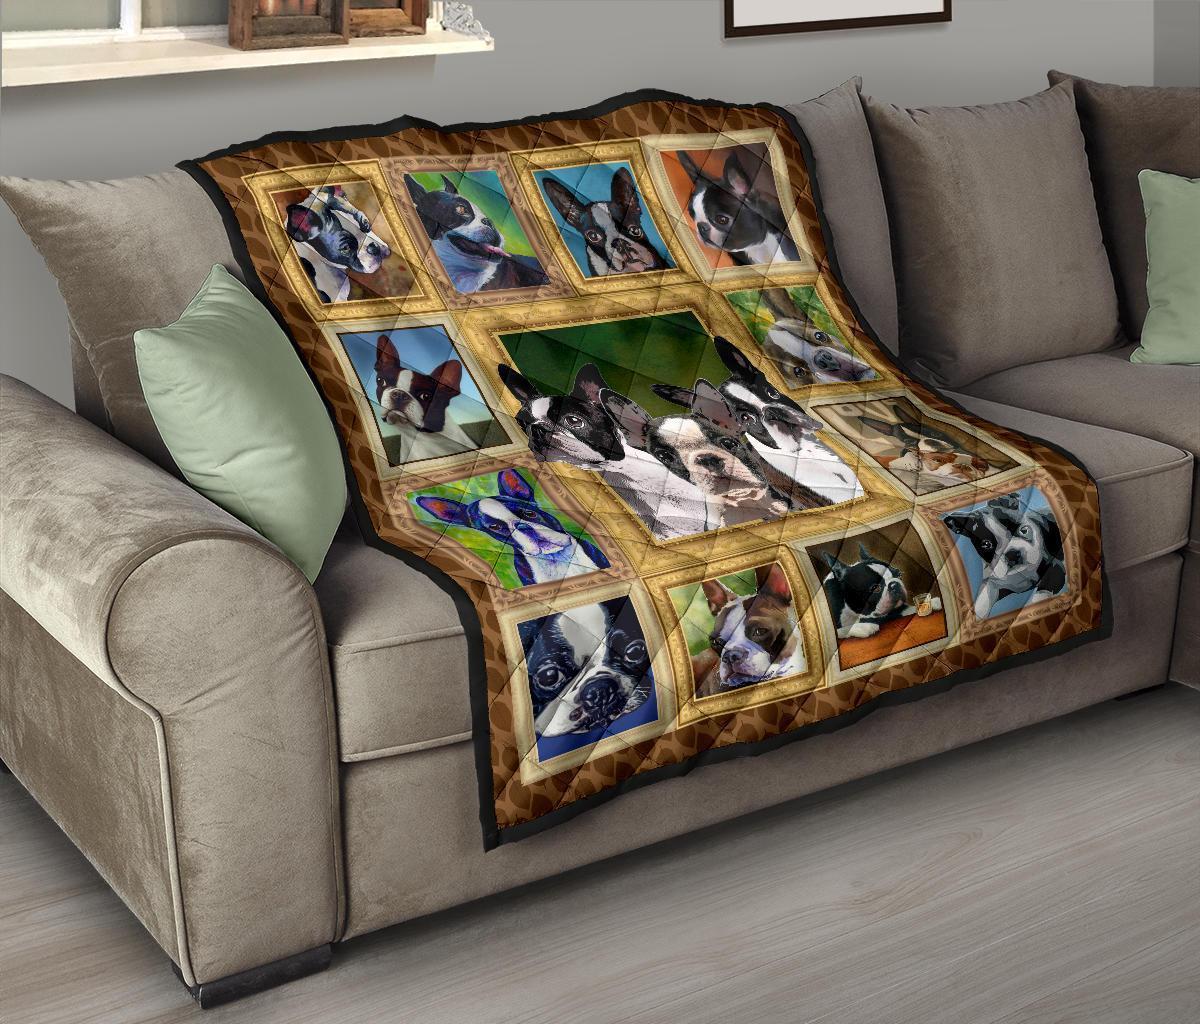 Boston Terrier Dog Quilt Blanket Amazing-Gear Wanta